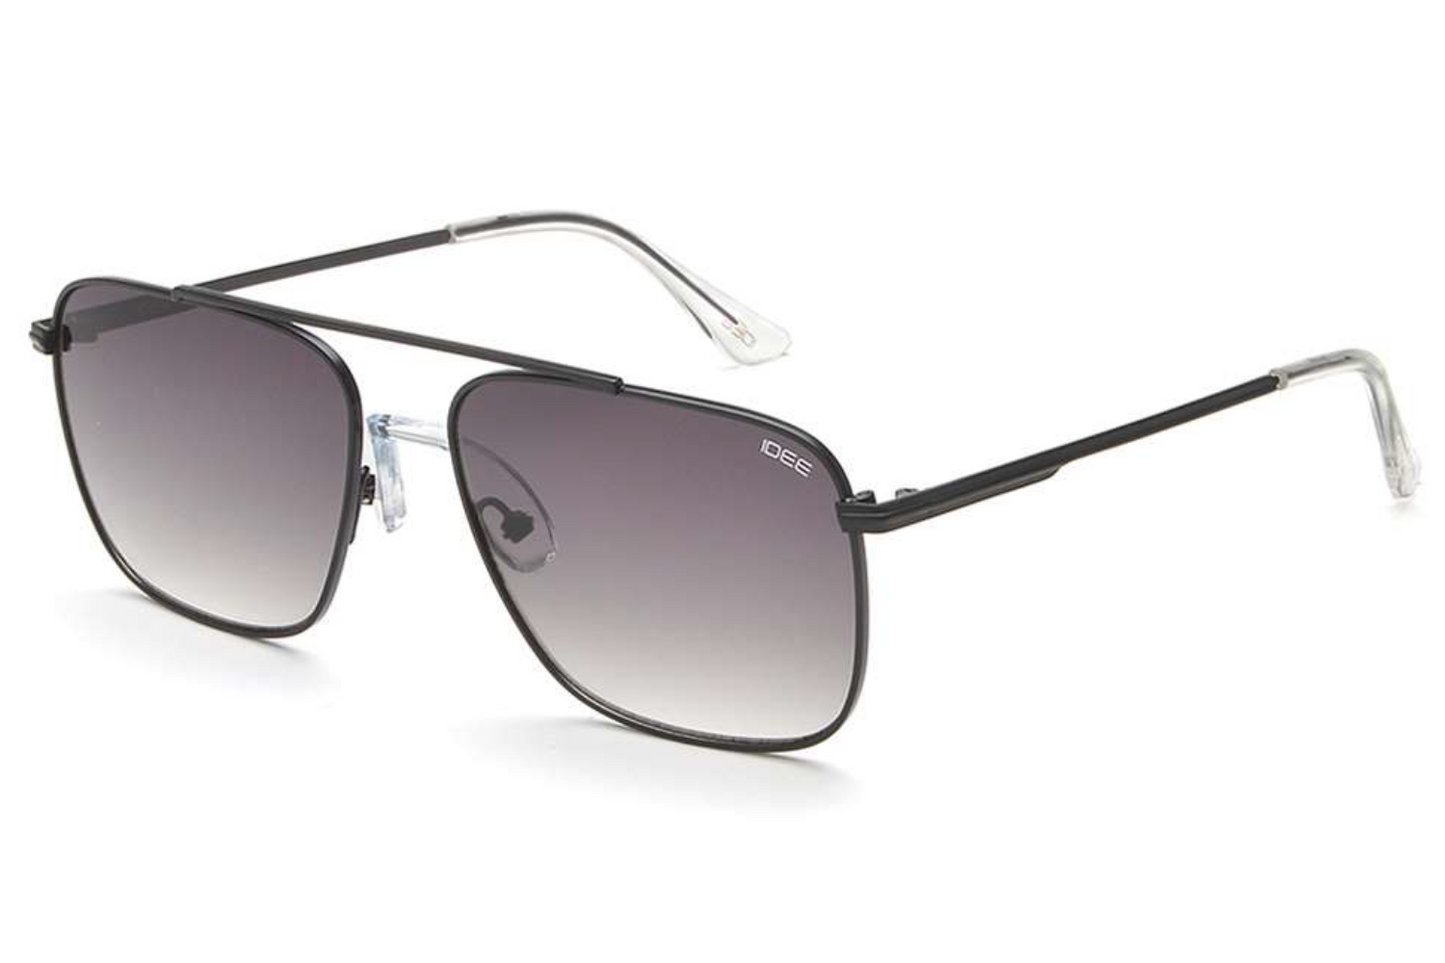 IDEE Sunglasses S2921